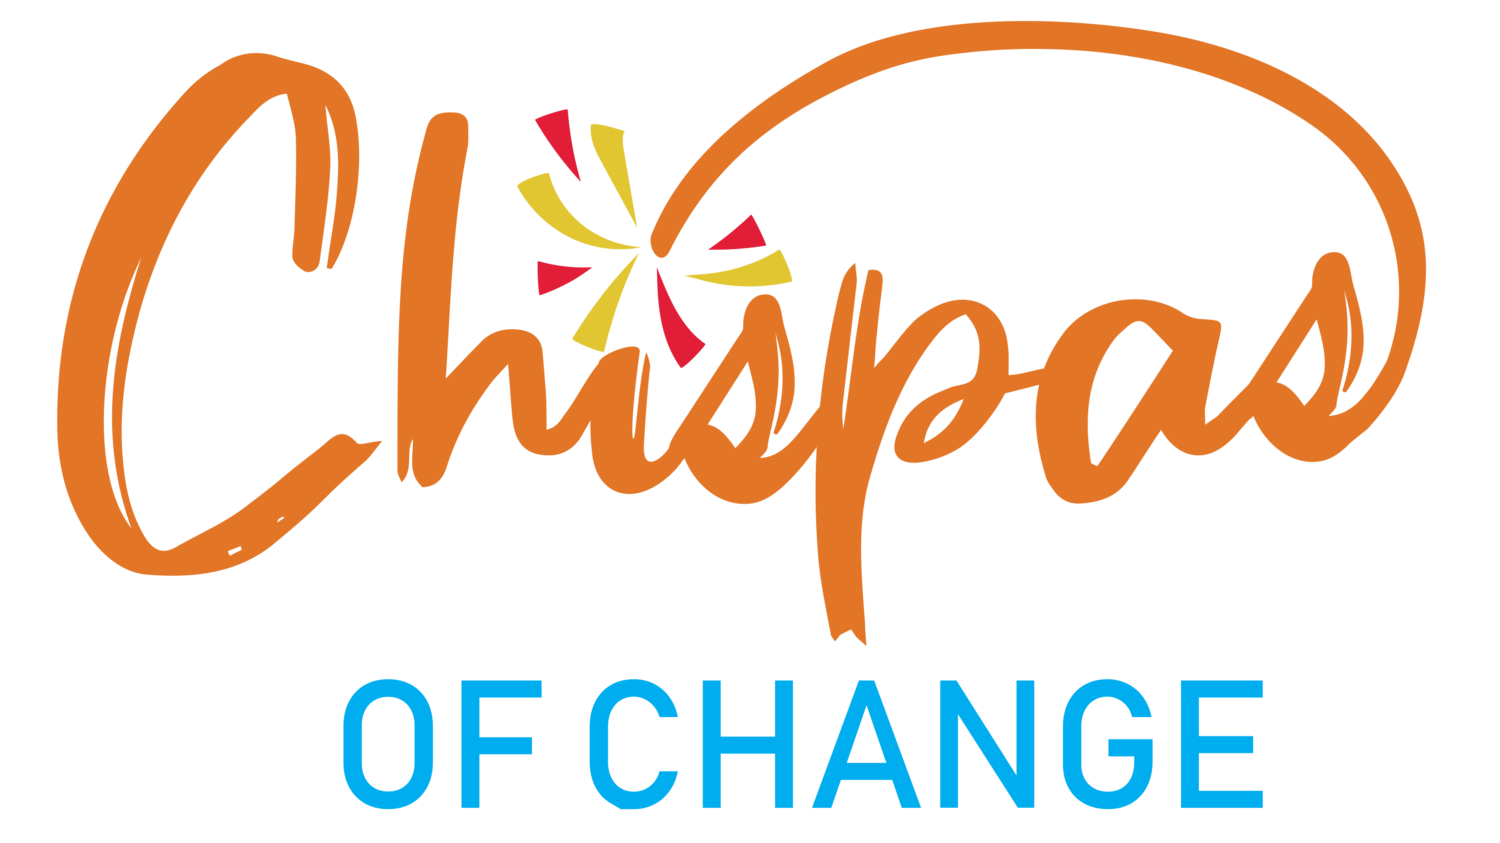 Chispas of Change